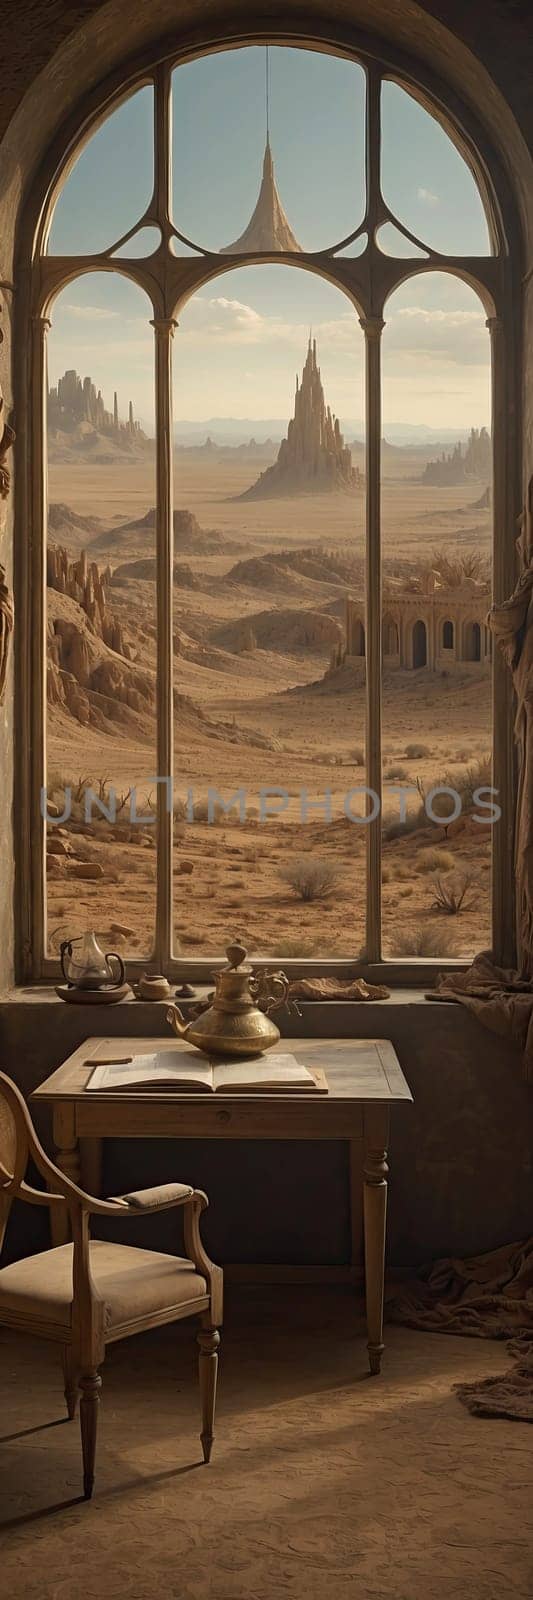 Desert View Room by applesstock